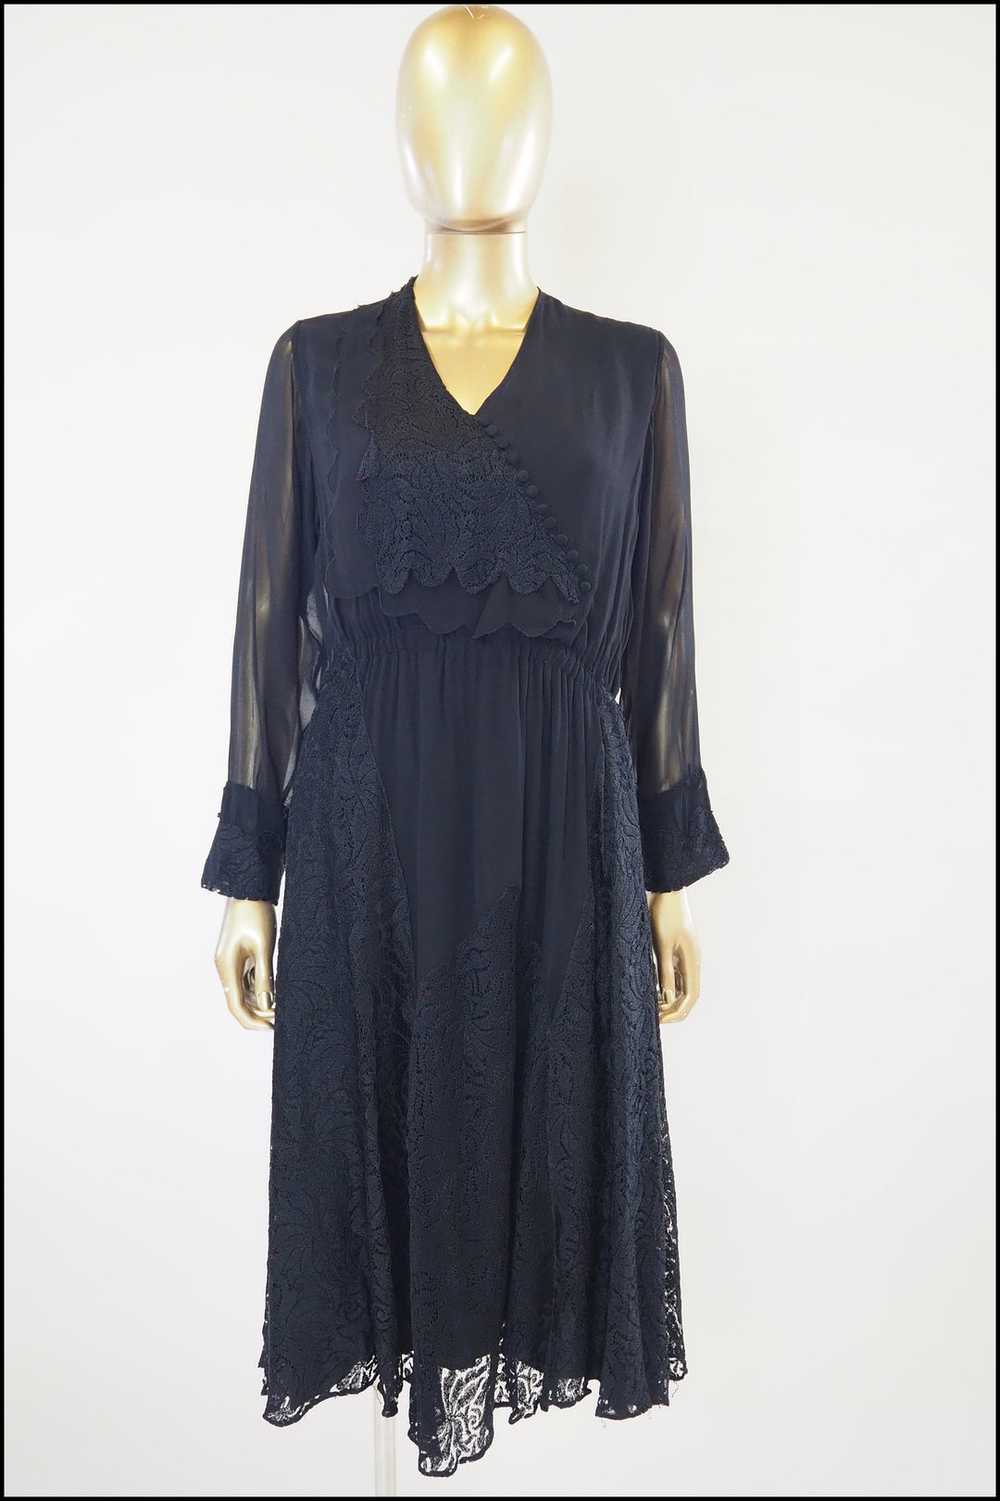 Vintage 1930s Black Chiffon Lace Dress - image 2